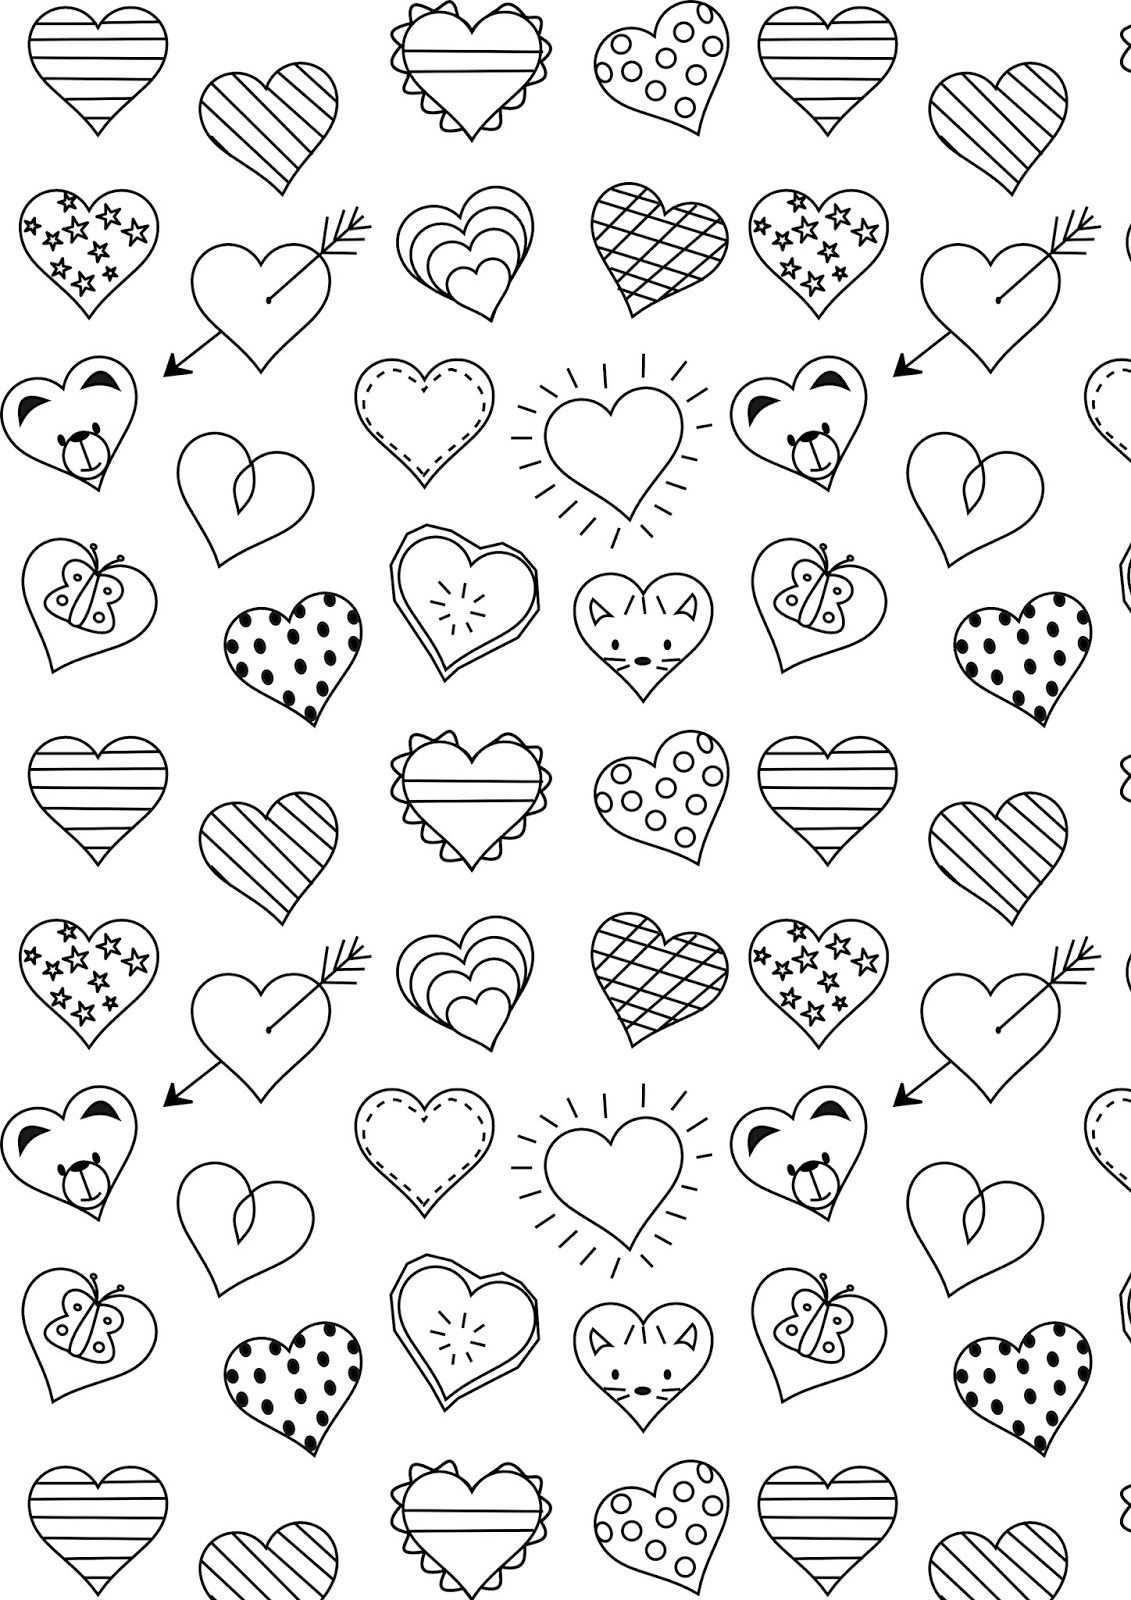 Free Printable Heart Coloring Page Ausdruckbare Ausmalseite Freebie Handbelettering B